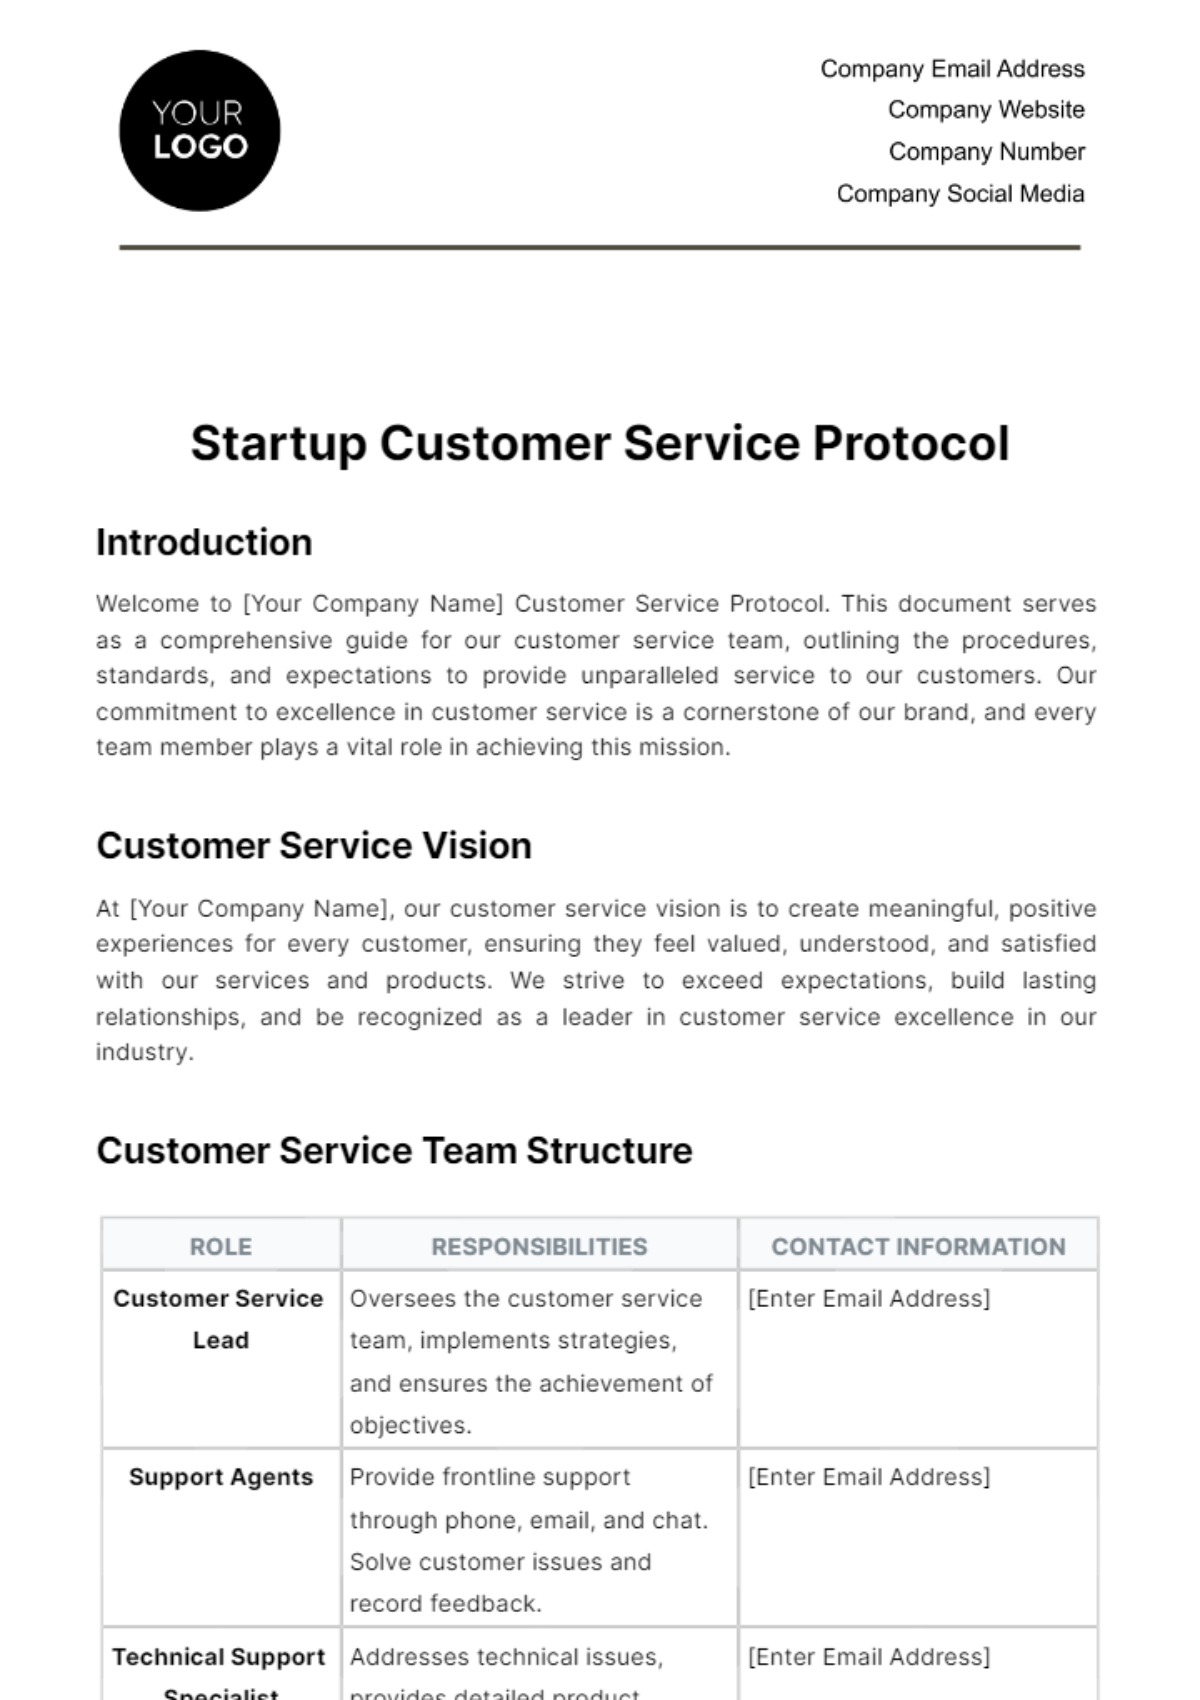 Startup Customer Service Protocol Template